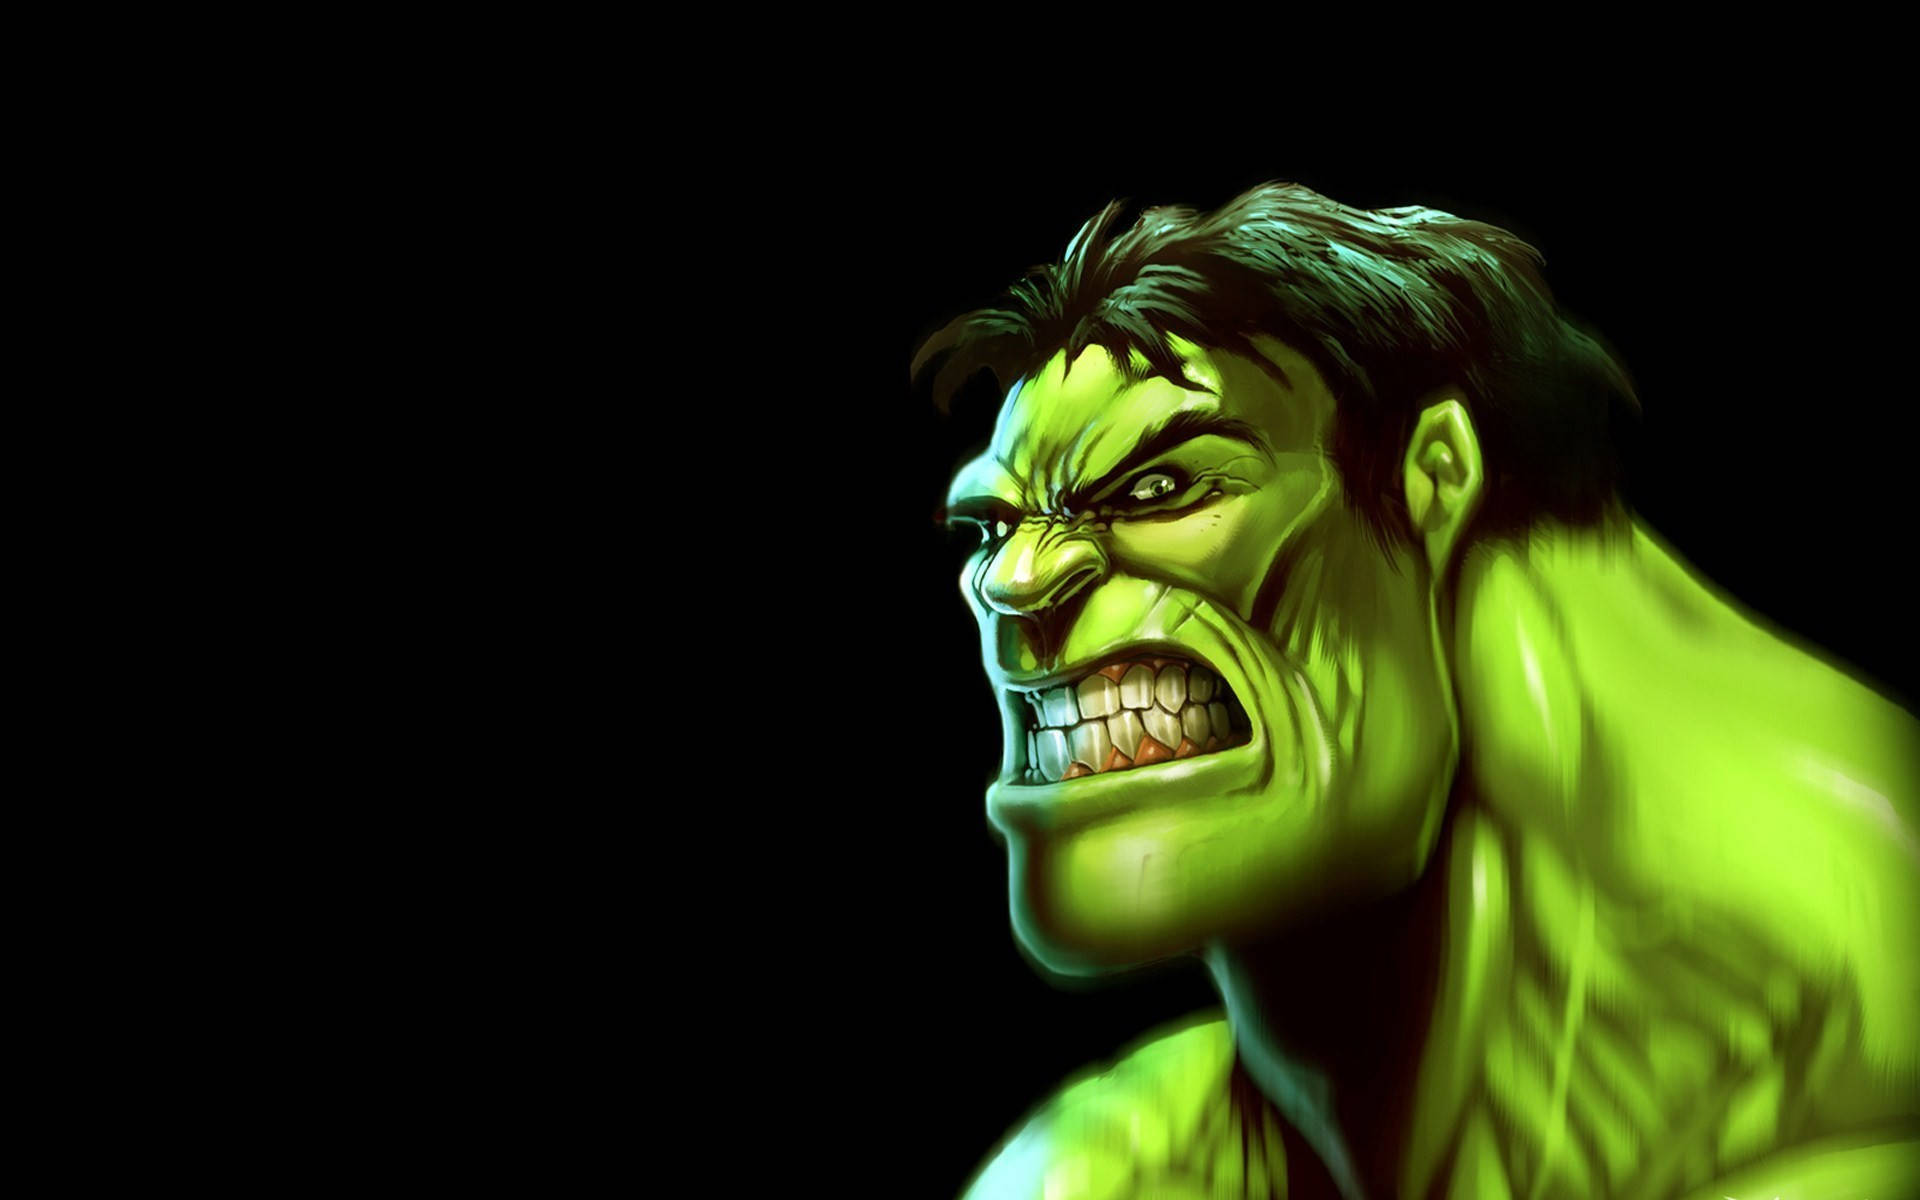 The Hulk Graphic Fan Art